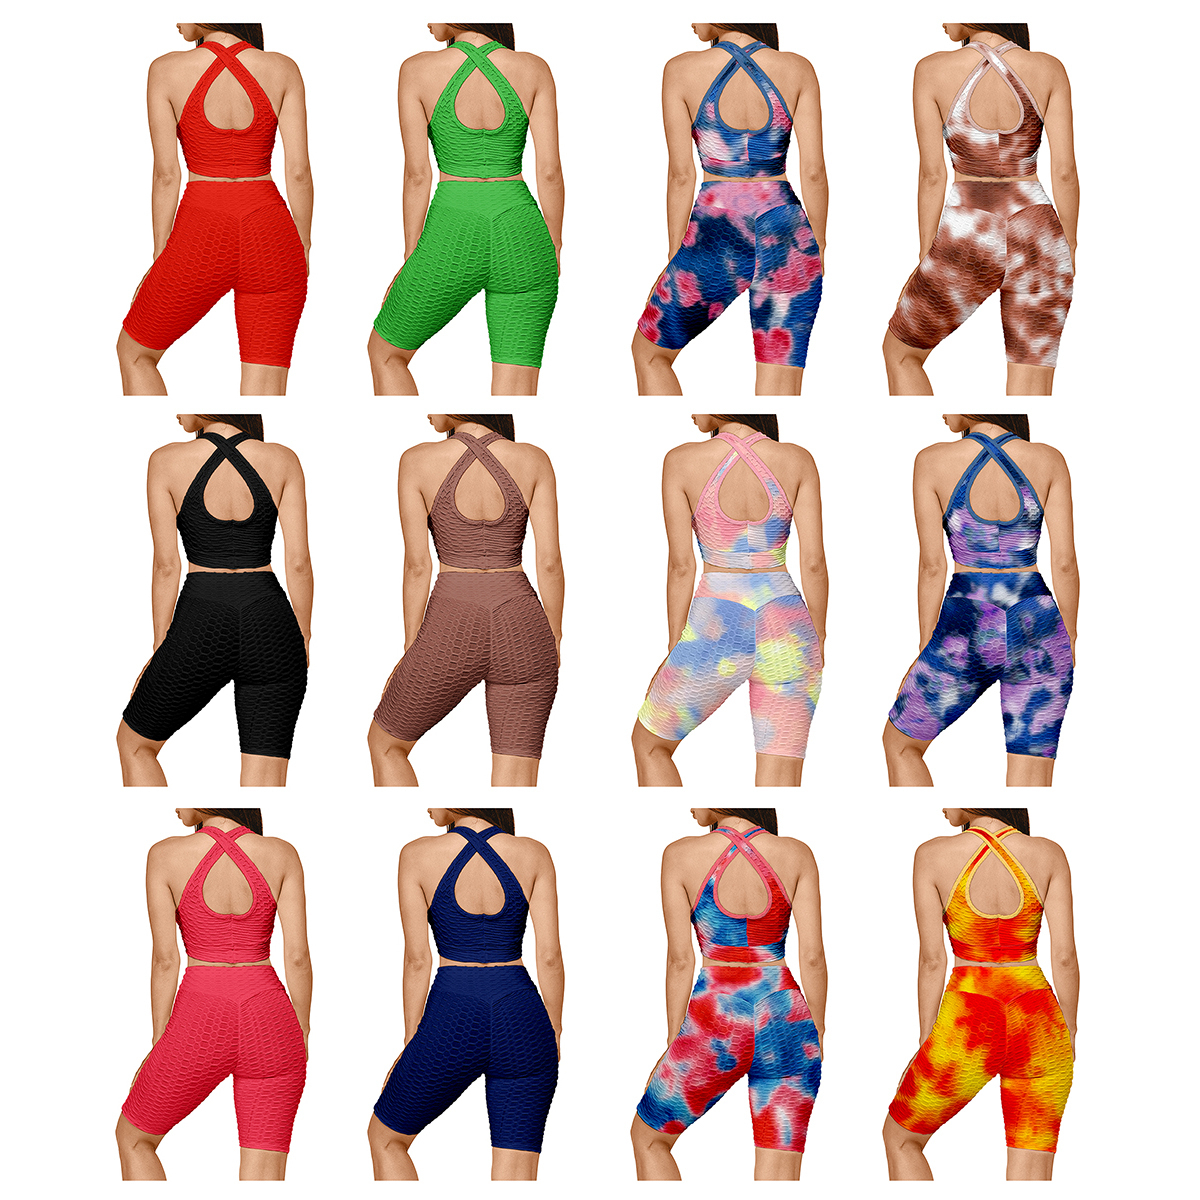 4-Piece Women's Anti Cellulite Sports Bra & High Waisted Biker Shorts Workout Yoga Set - Tie-Dye, X-Large